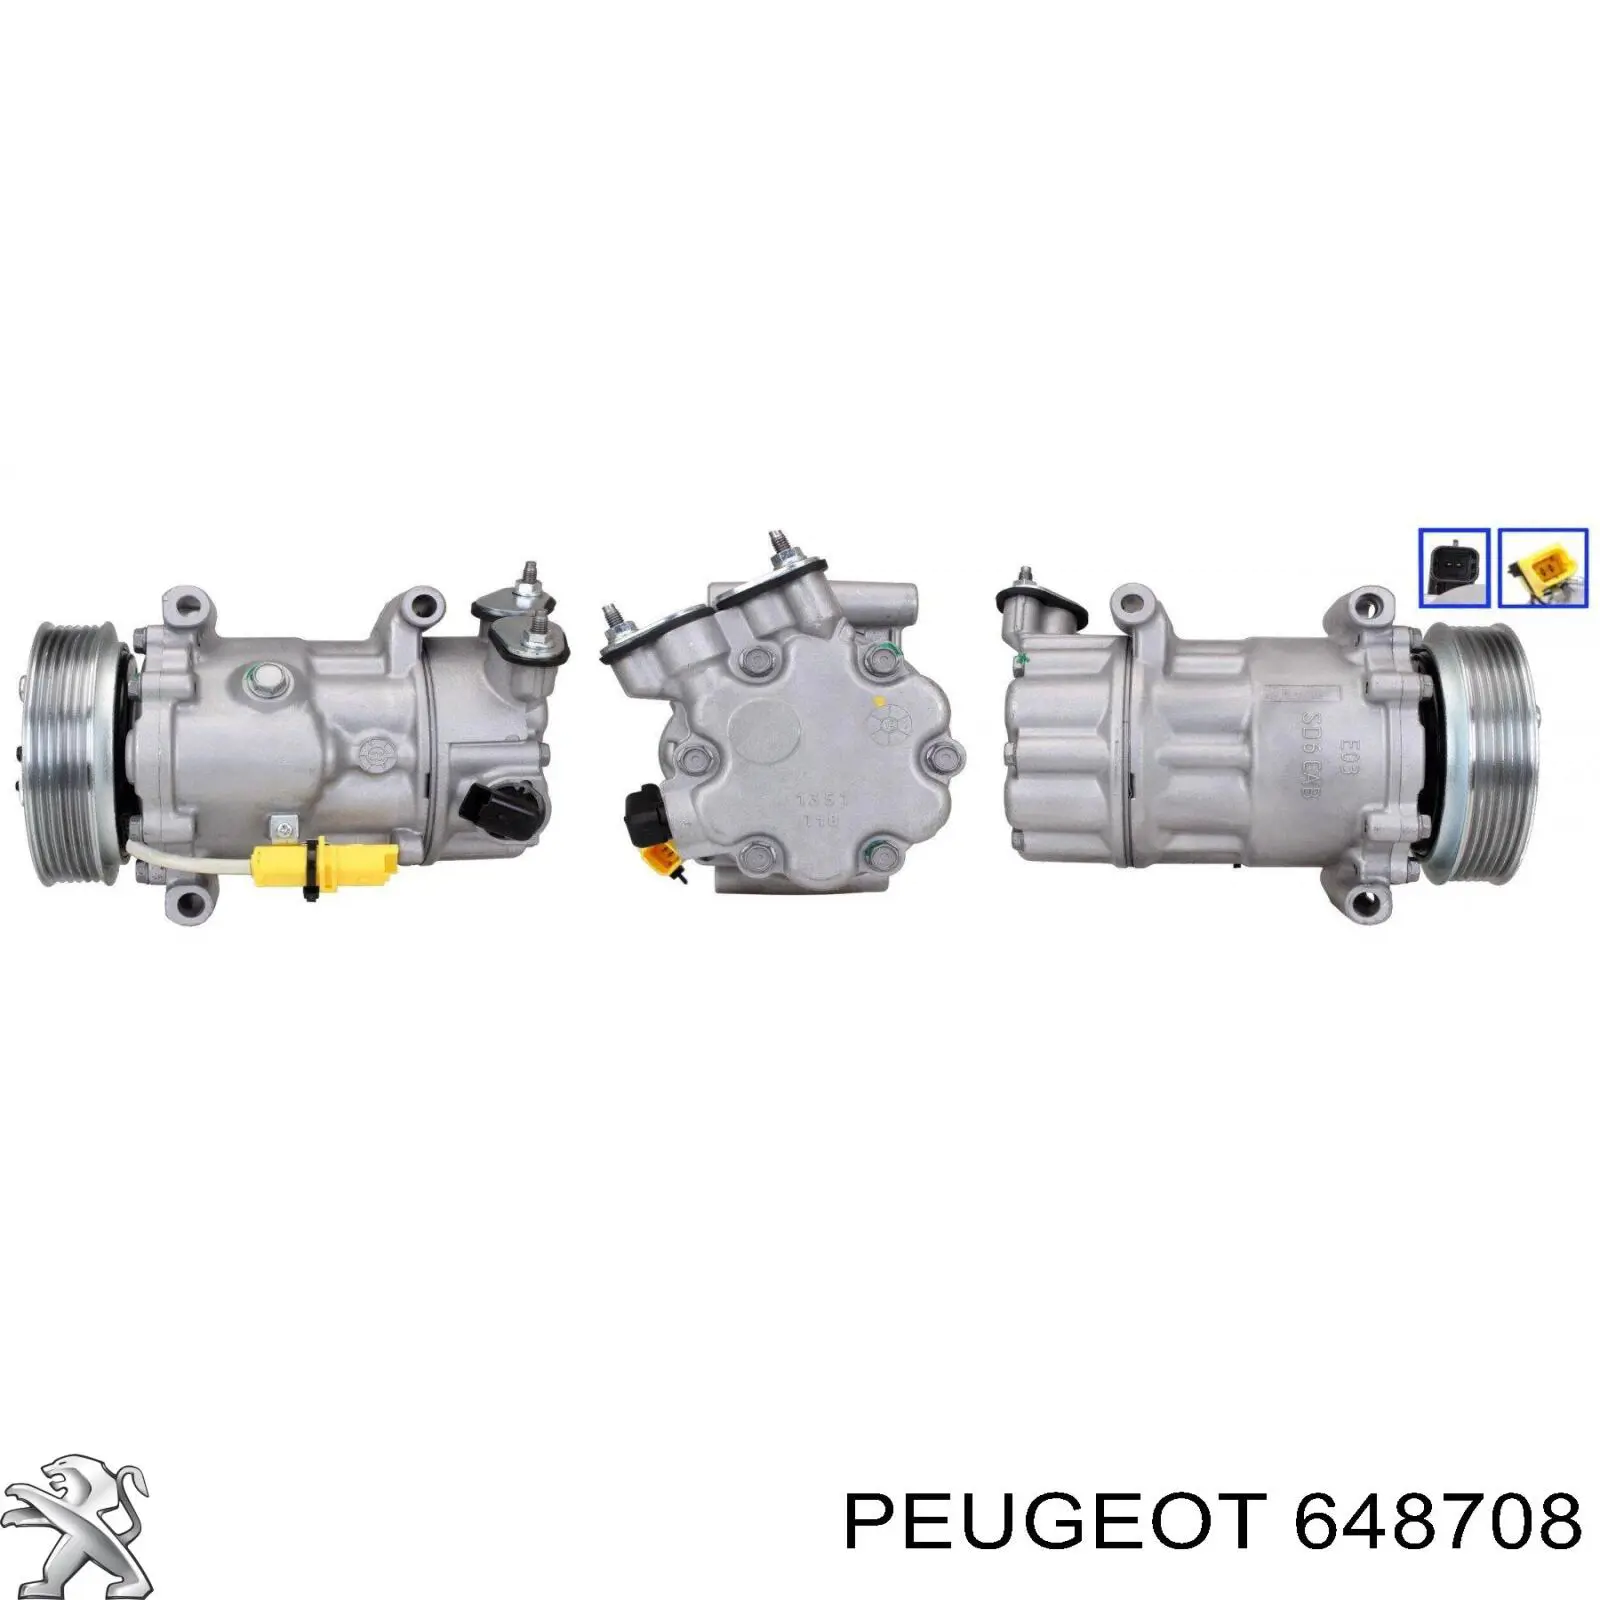 648708 Peugeot/Citroen compressor de aparelho de ar condicionado